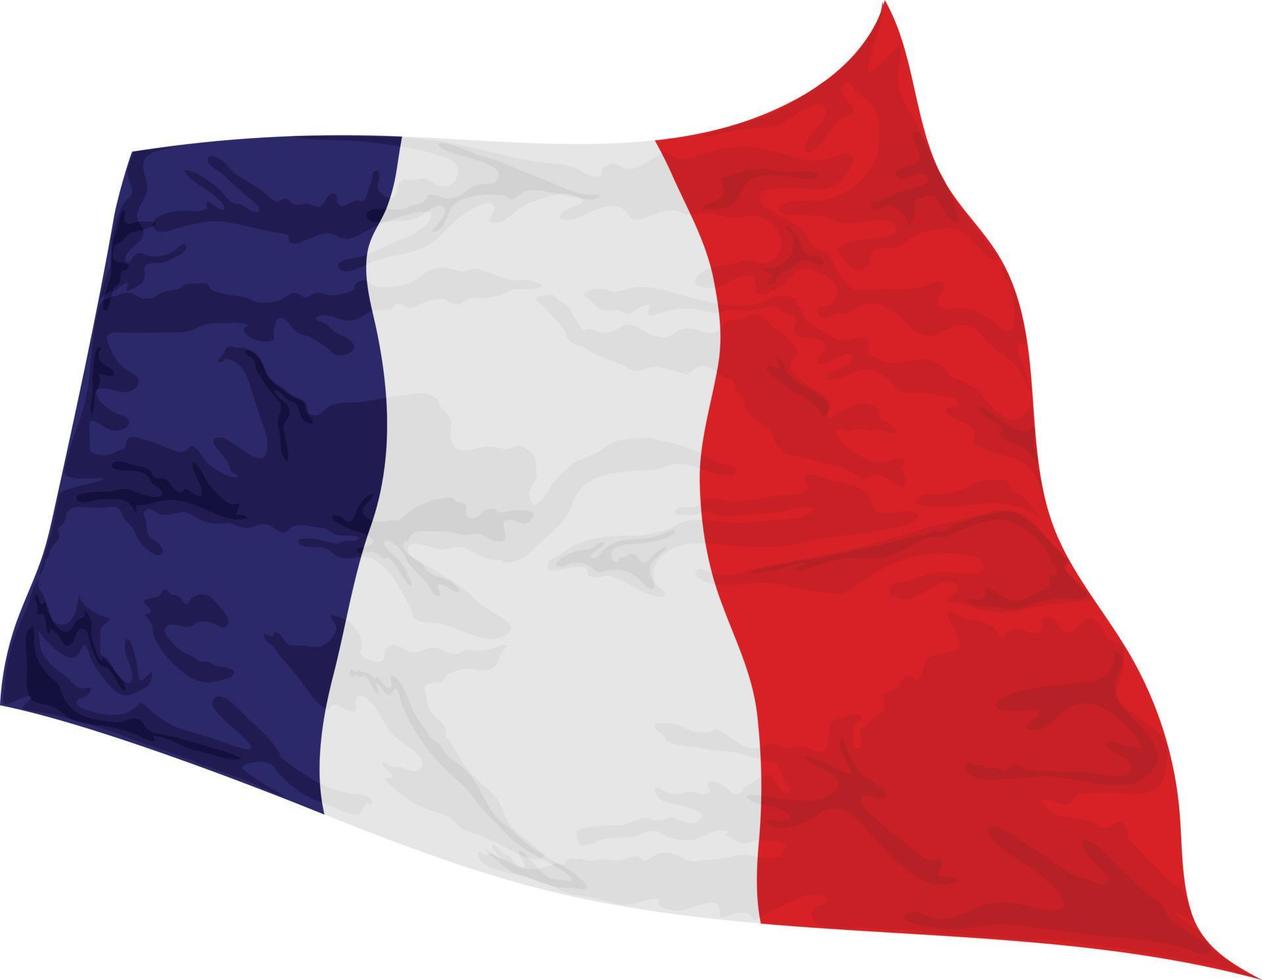 vektor illustration av frankrike flagga som svajar i vinden